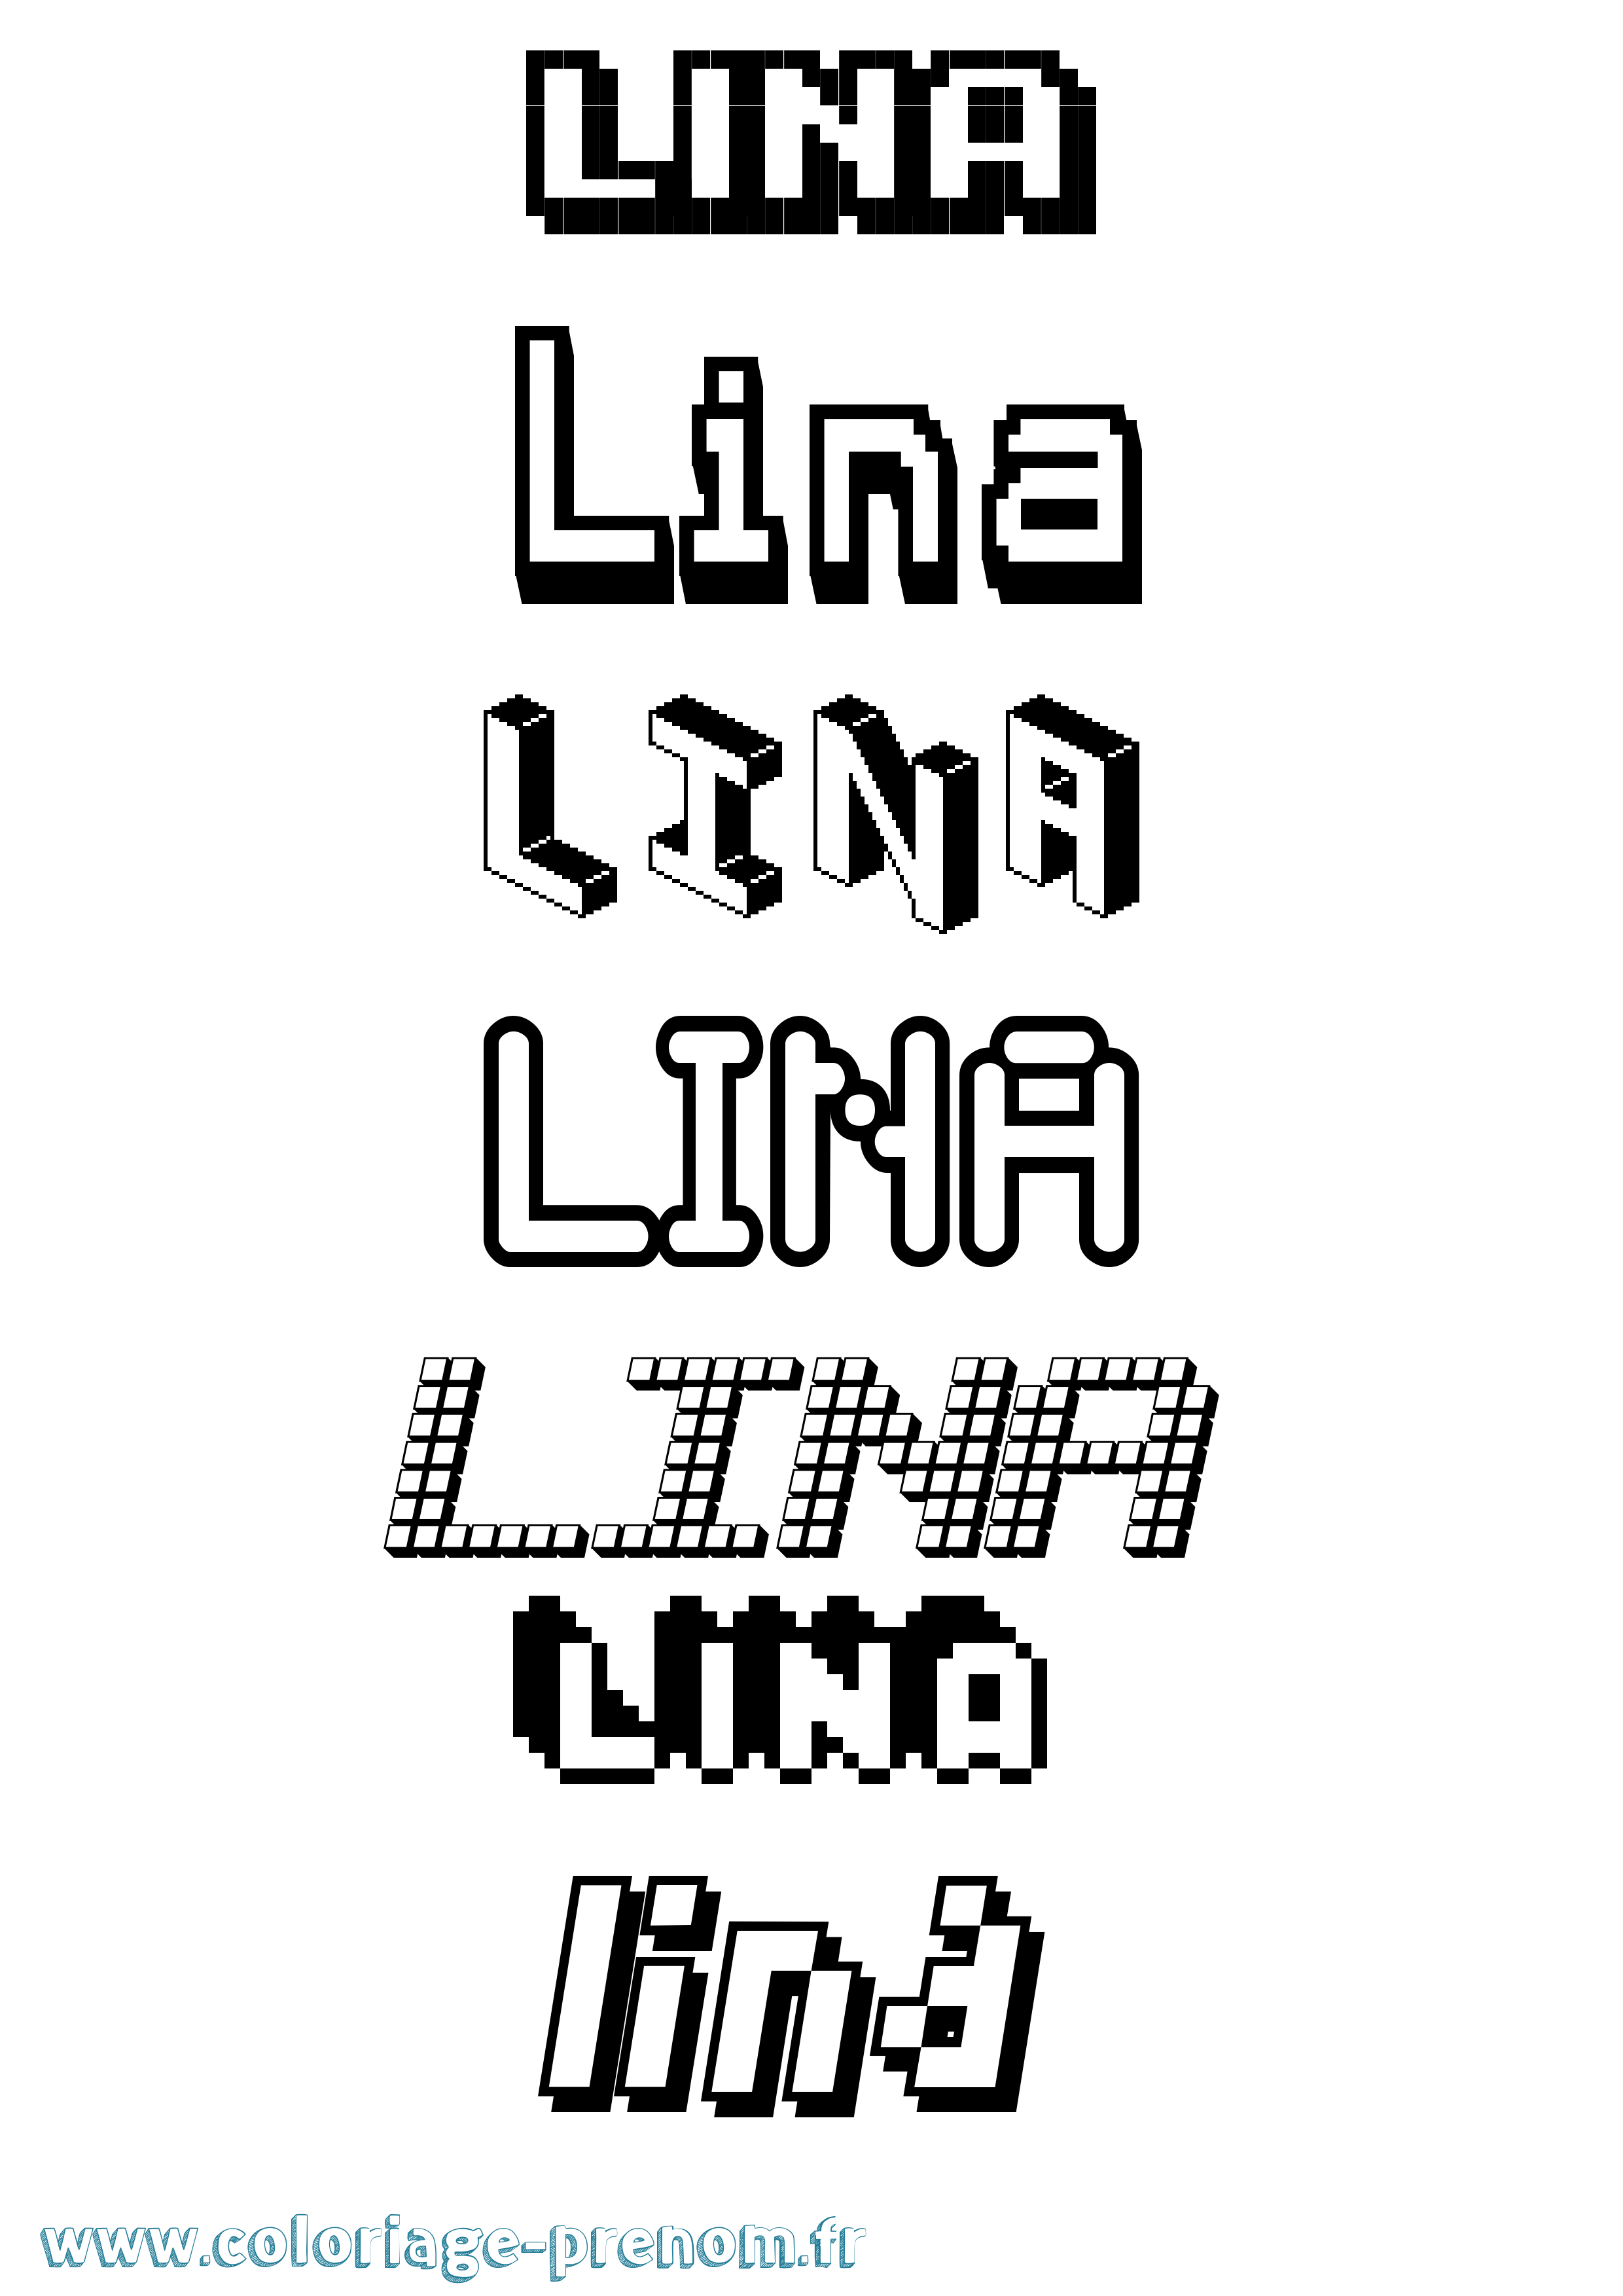 Coloriage prénom Lina Pixel